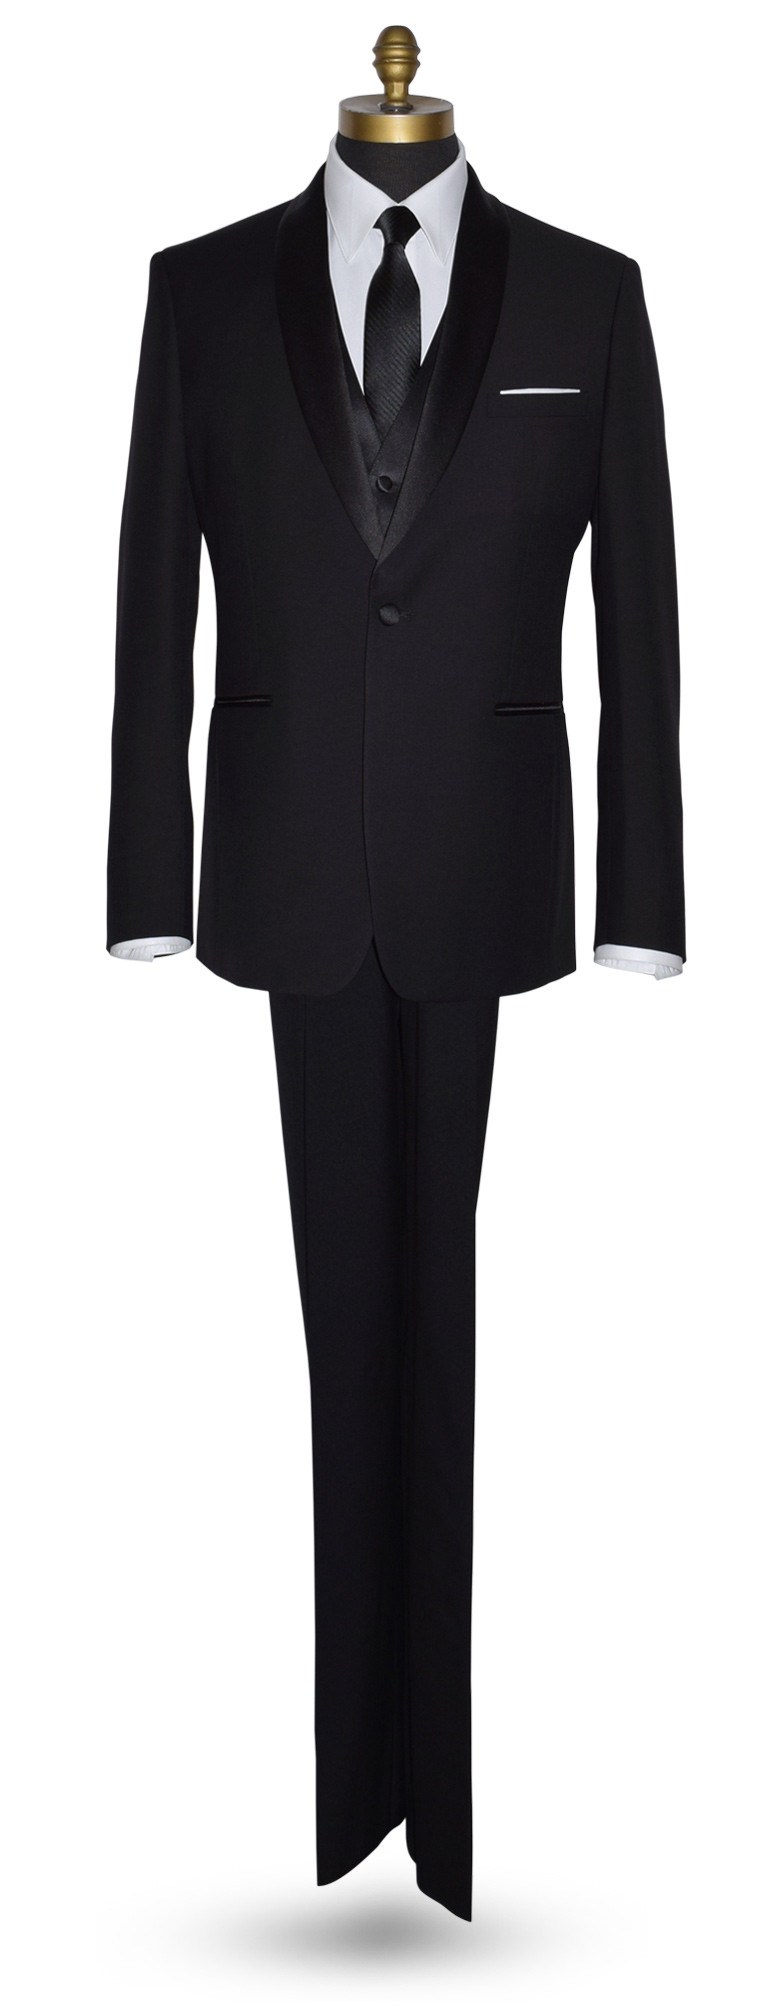 long black dress tie with stripe for men's suit or tuxedo